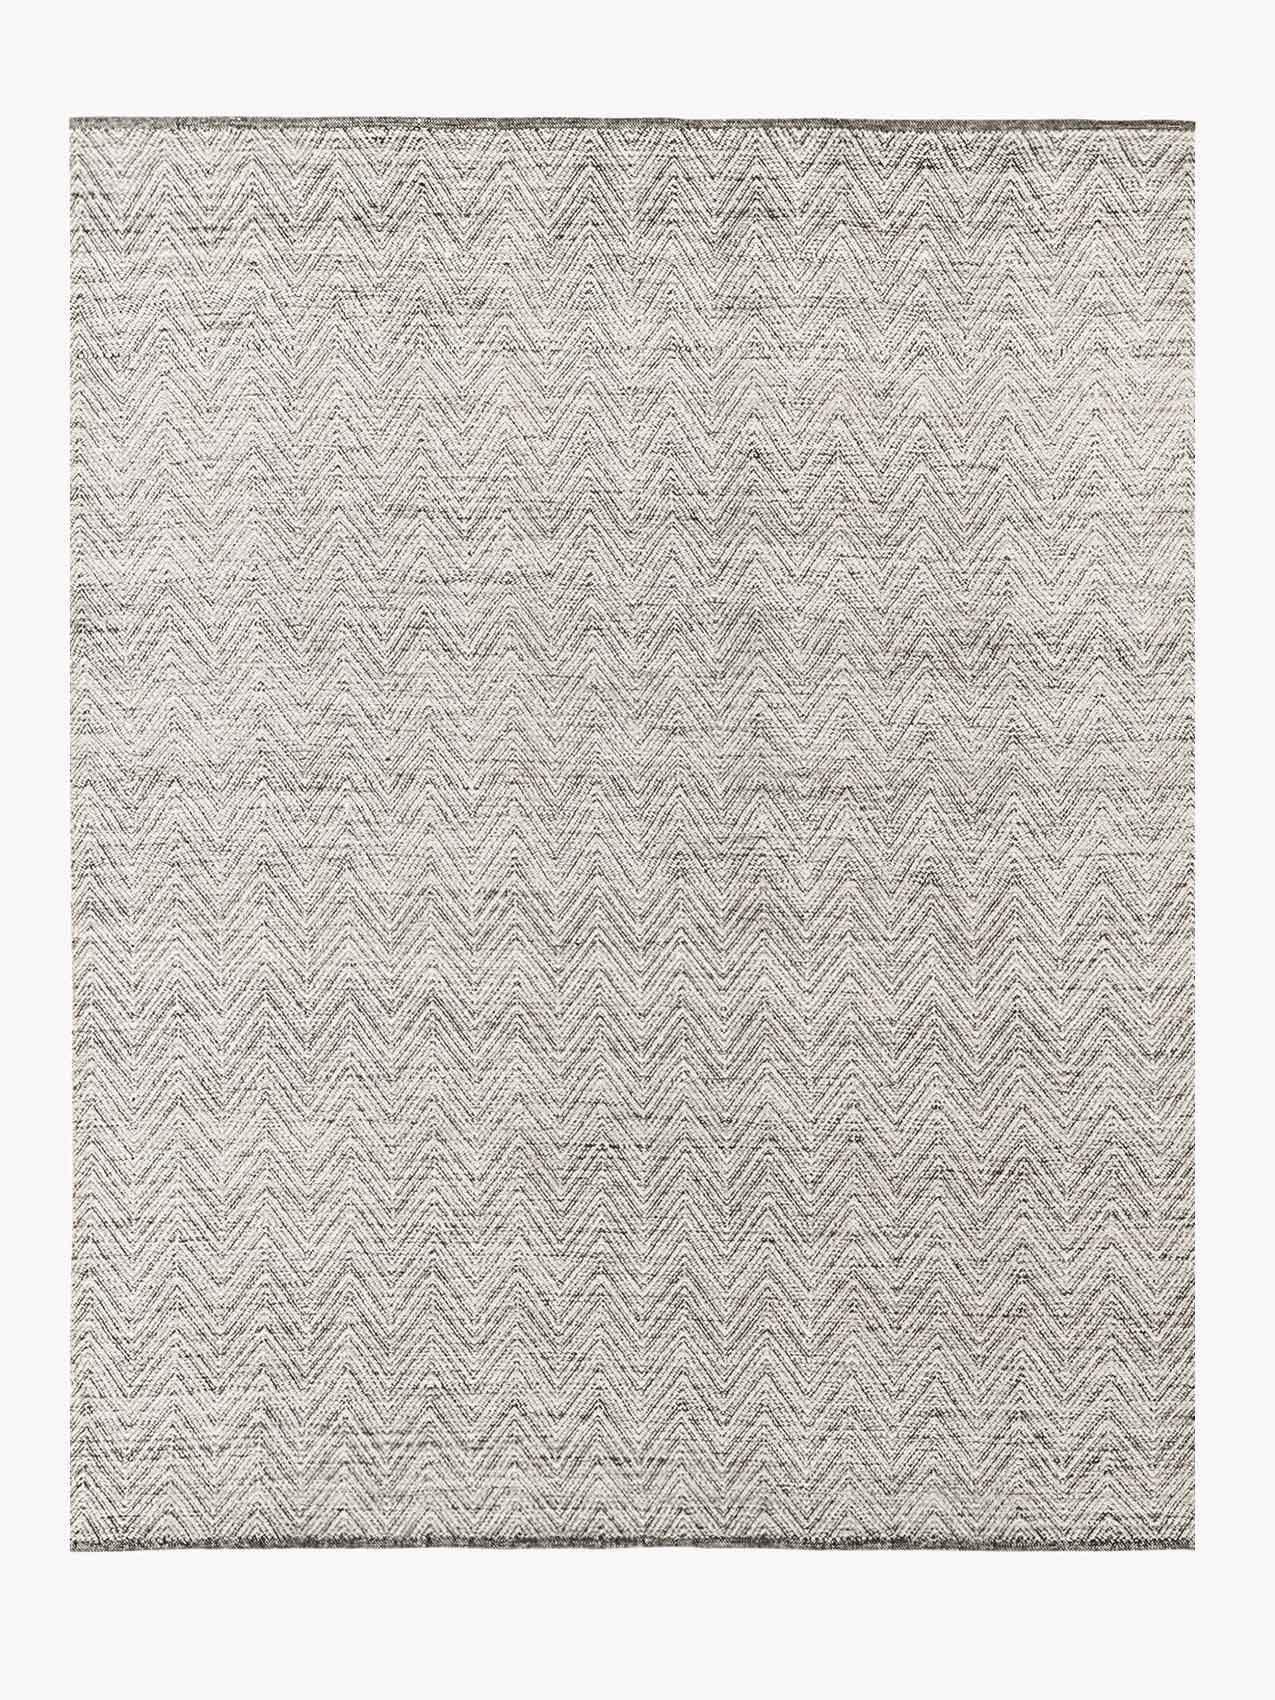 For Sale: Silver Ben Soleimani Ceyah Rug– Hand-woven Plush Textured Wool + Linen Charcoal 12'x15'